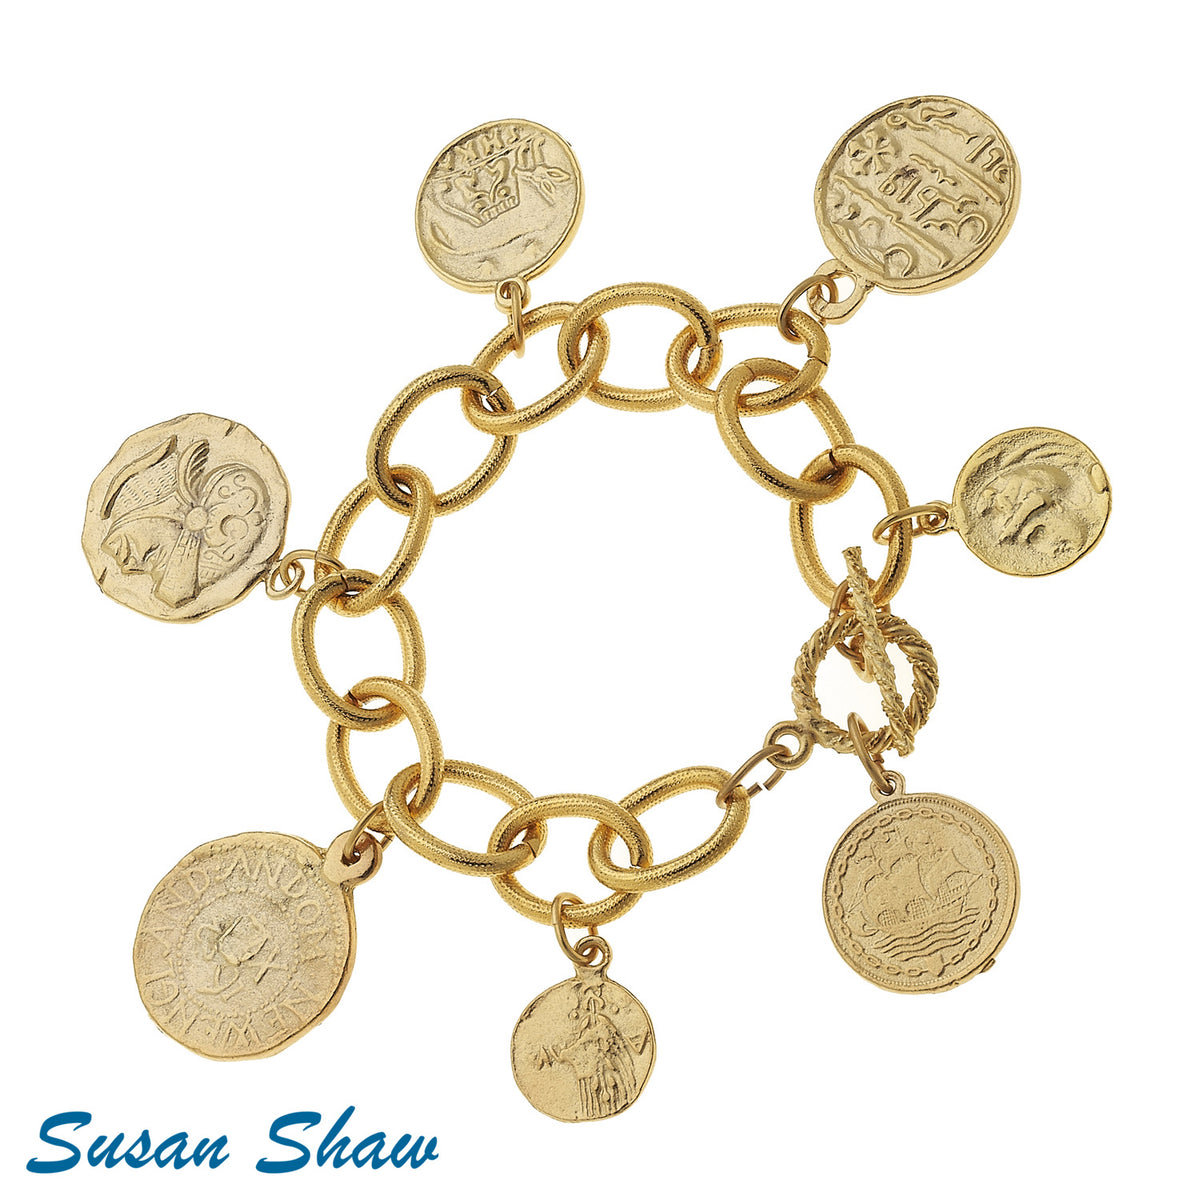 Handcast Gold Coin Charm Bracelet.